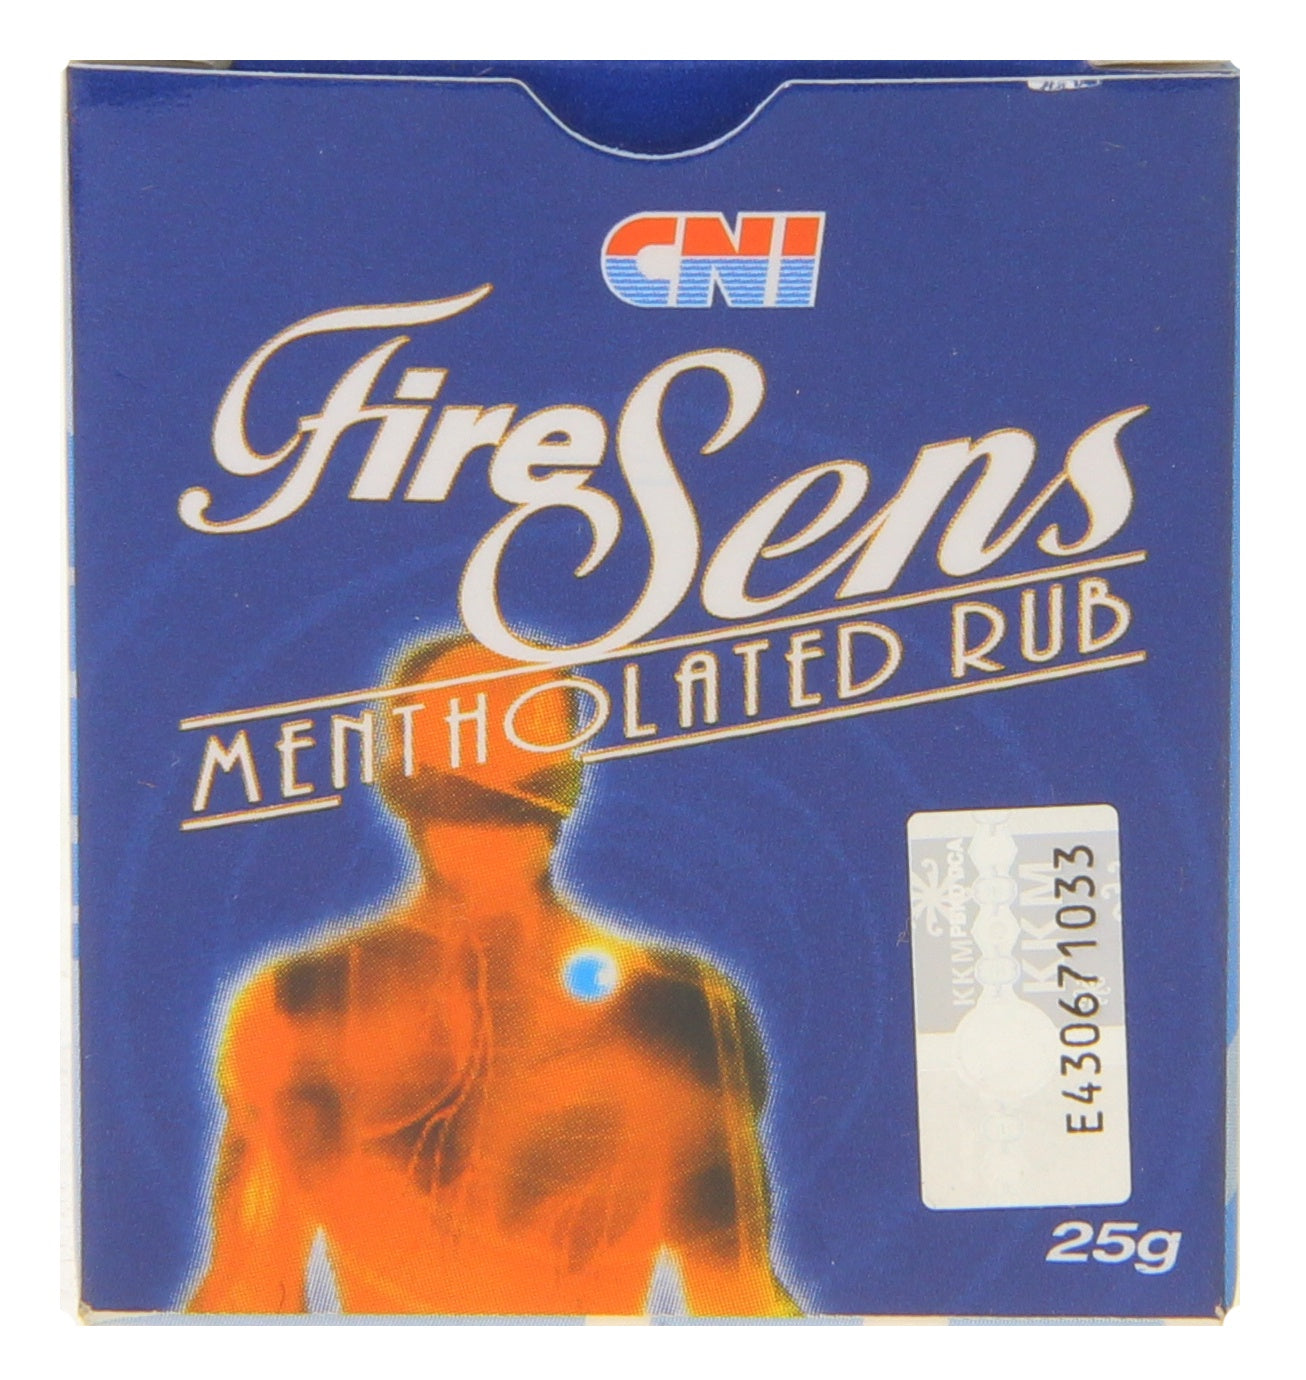 CNI, Fire Sens Mentholated Rub, 25 g